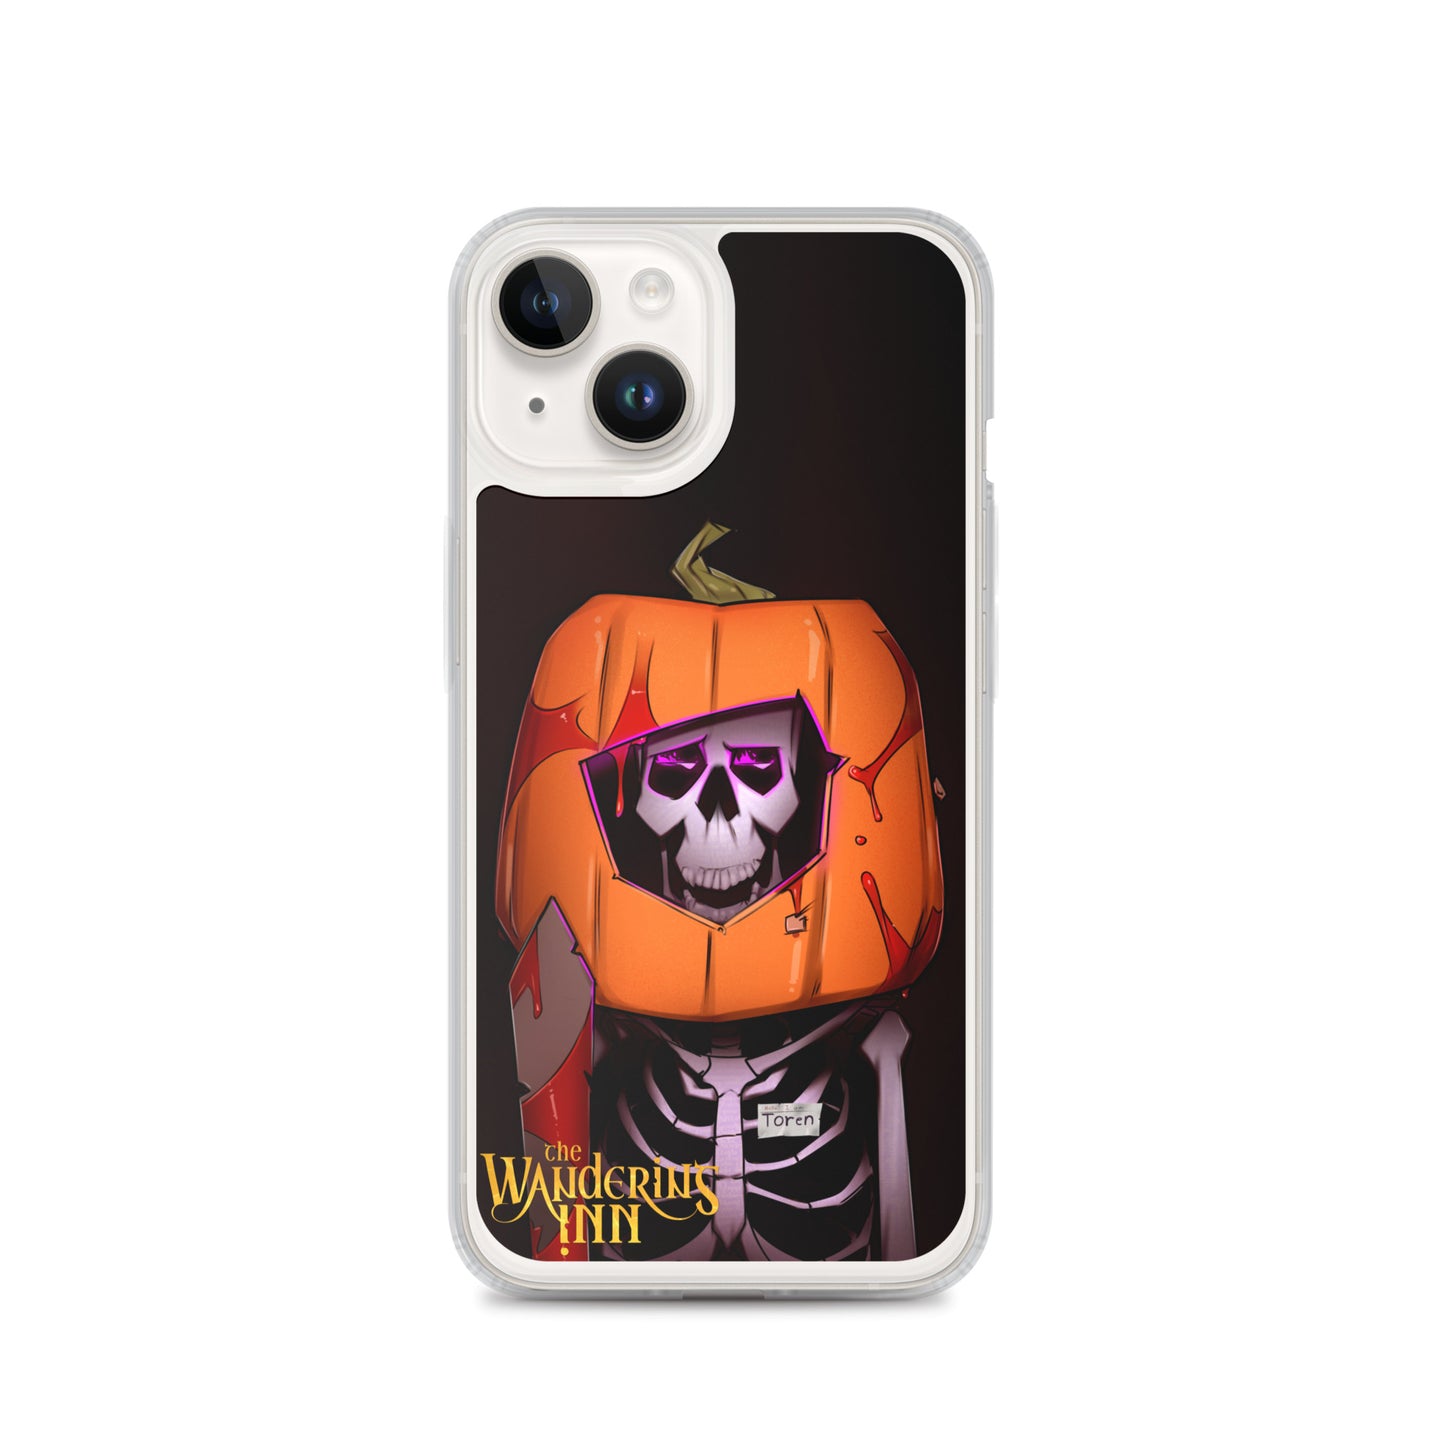 Pumpkin Toren Phone Case (iPhone)